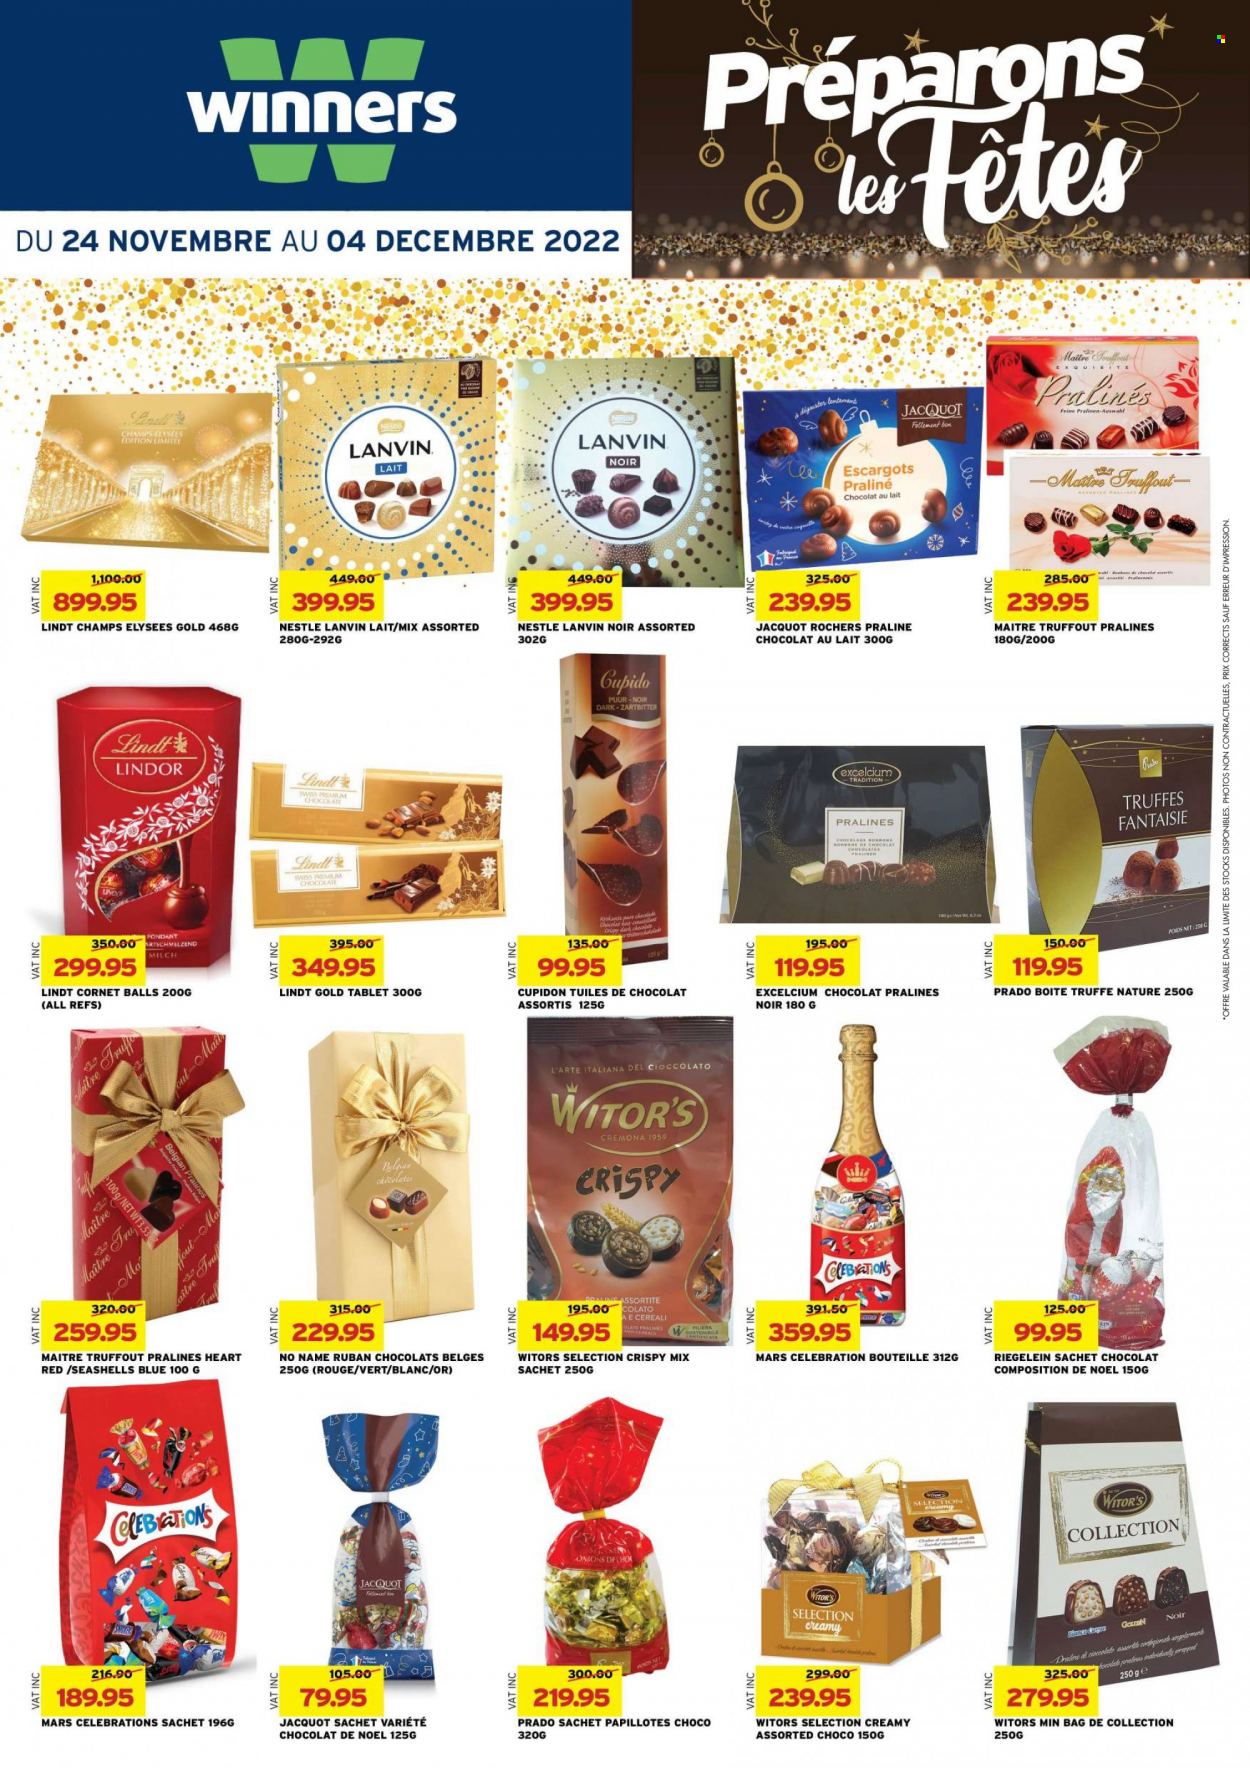 Winner's Catalogue - 24.11.2022 - 4.12.2022 - Sales products - onion, No Name, chocolate, Mars, Celebration, Lanvin, Nestlé, pralines, Lindt, Lindor. Page 5.